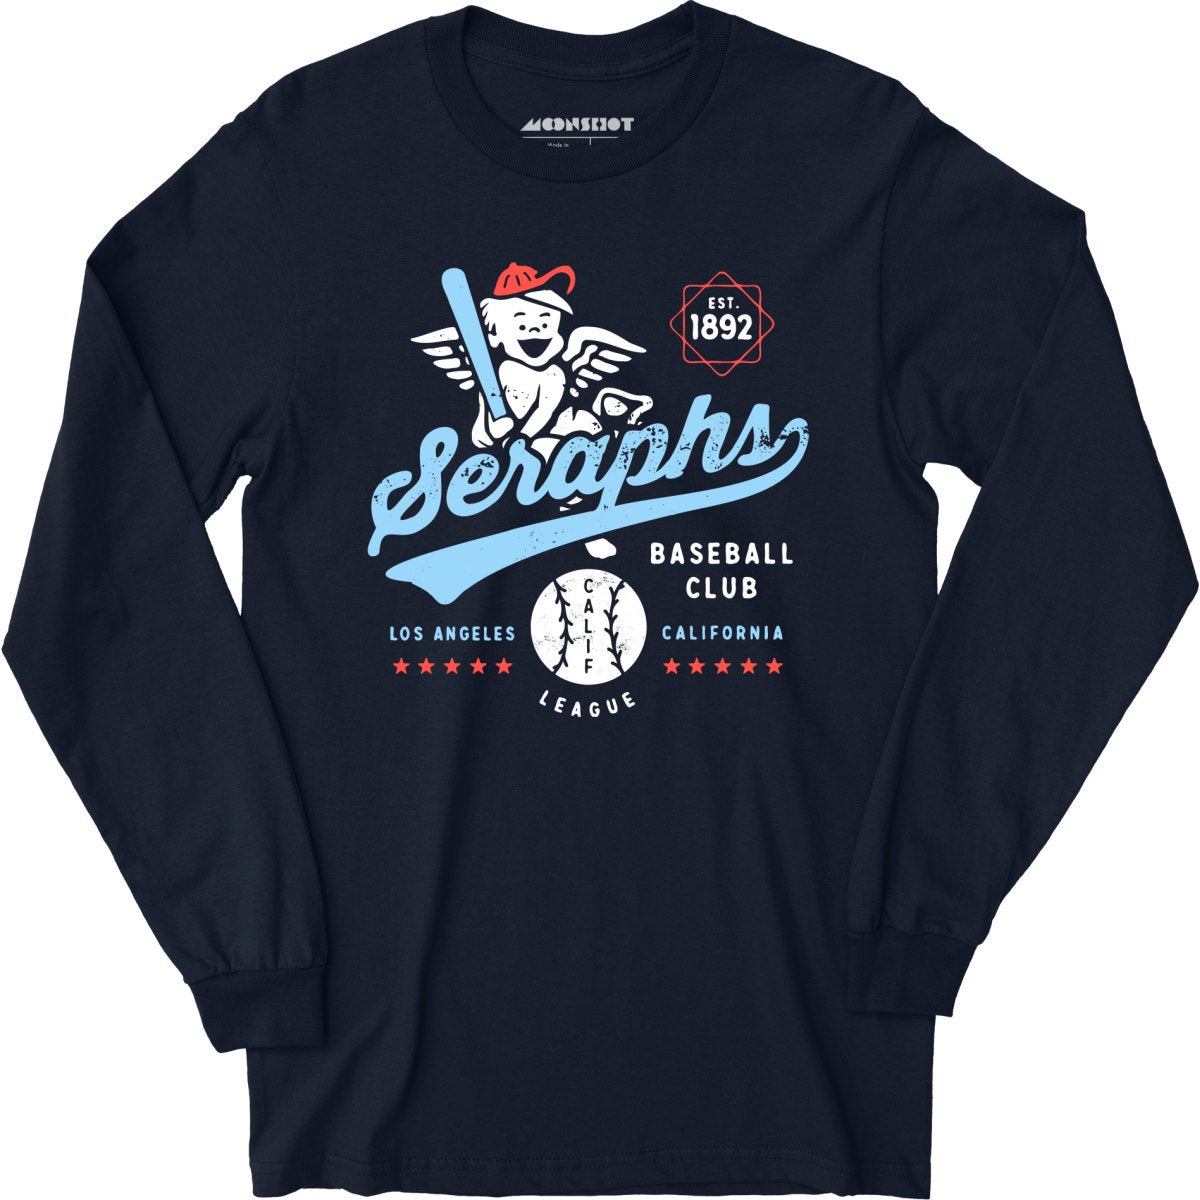 Los Angeles Seraphs - California - Vintage Defunct Baseball Teams - Long Sleeve T-Shirt